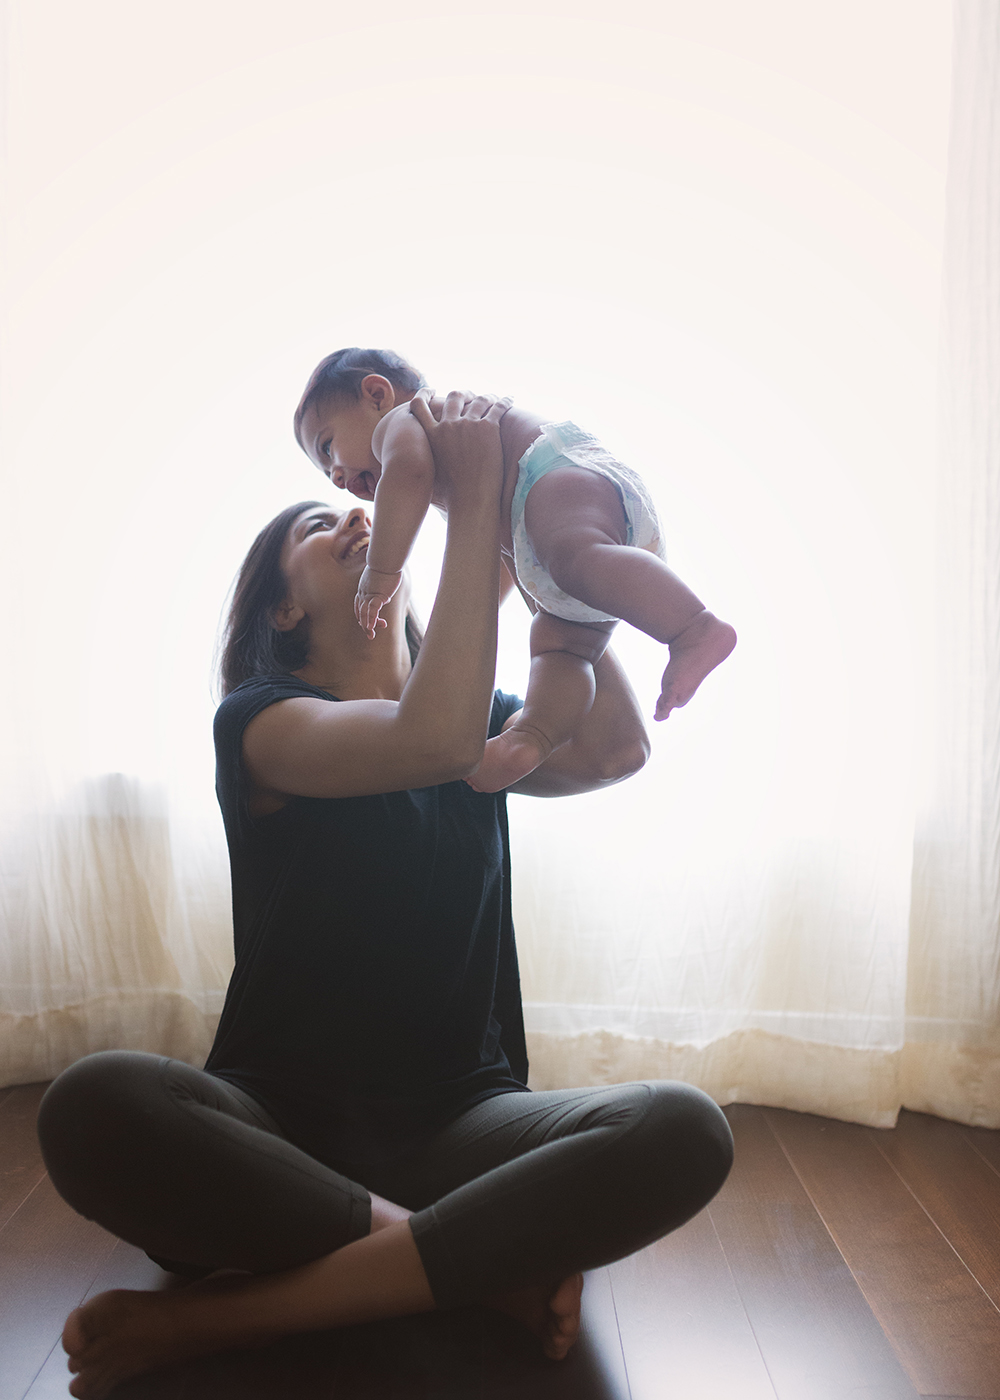 Edmonton Milestone Photographer Baby Riel 6 months 6.jpg